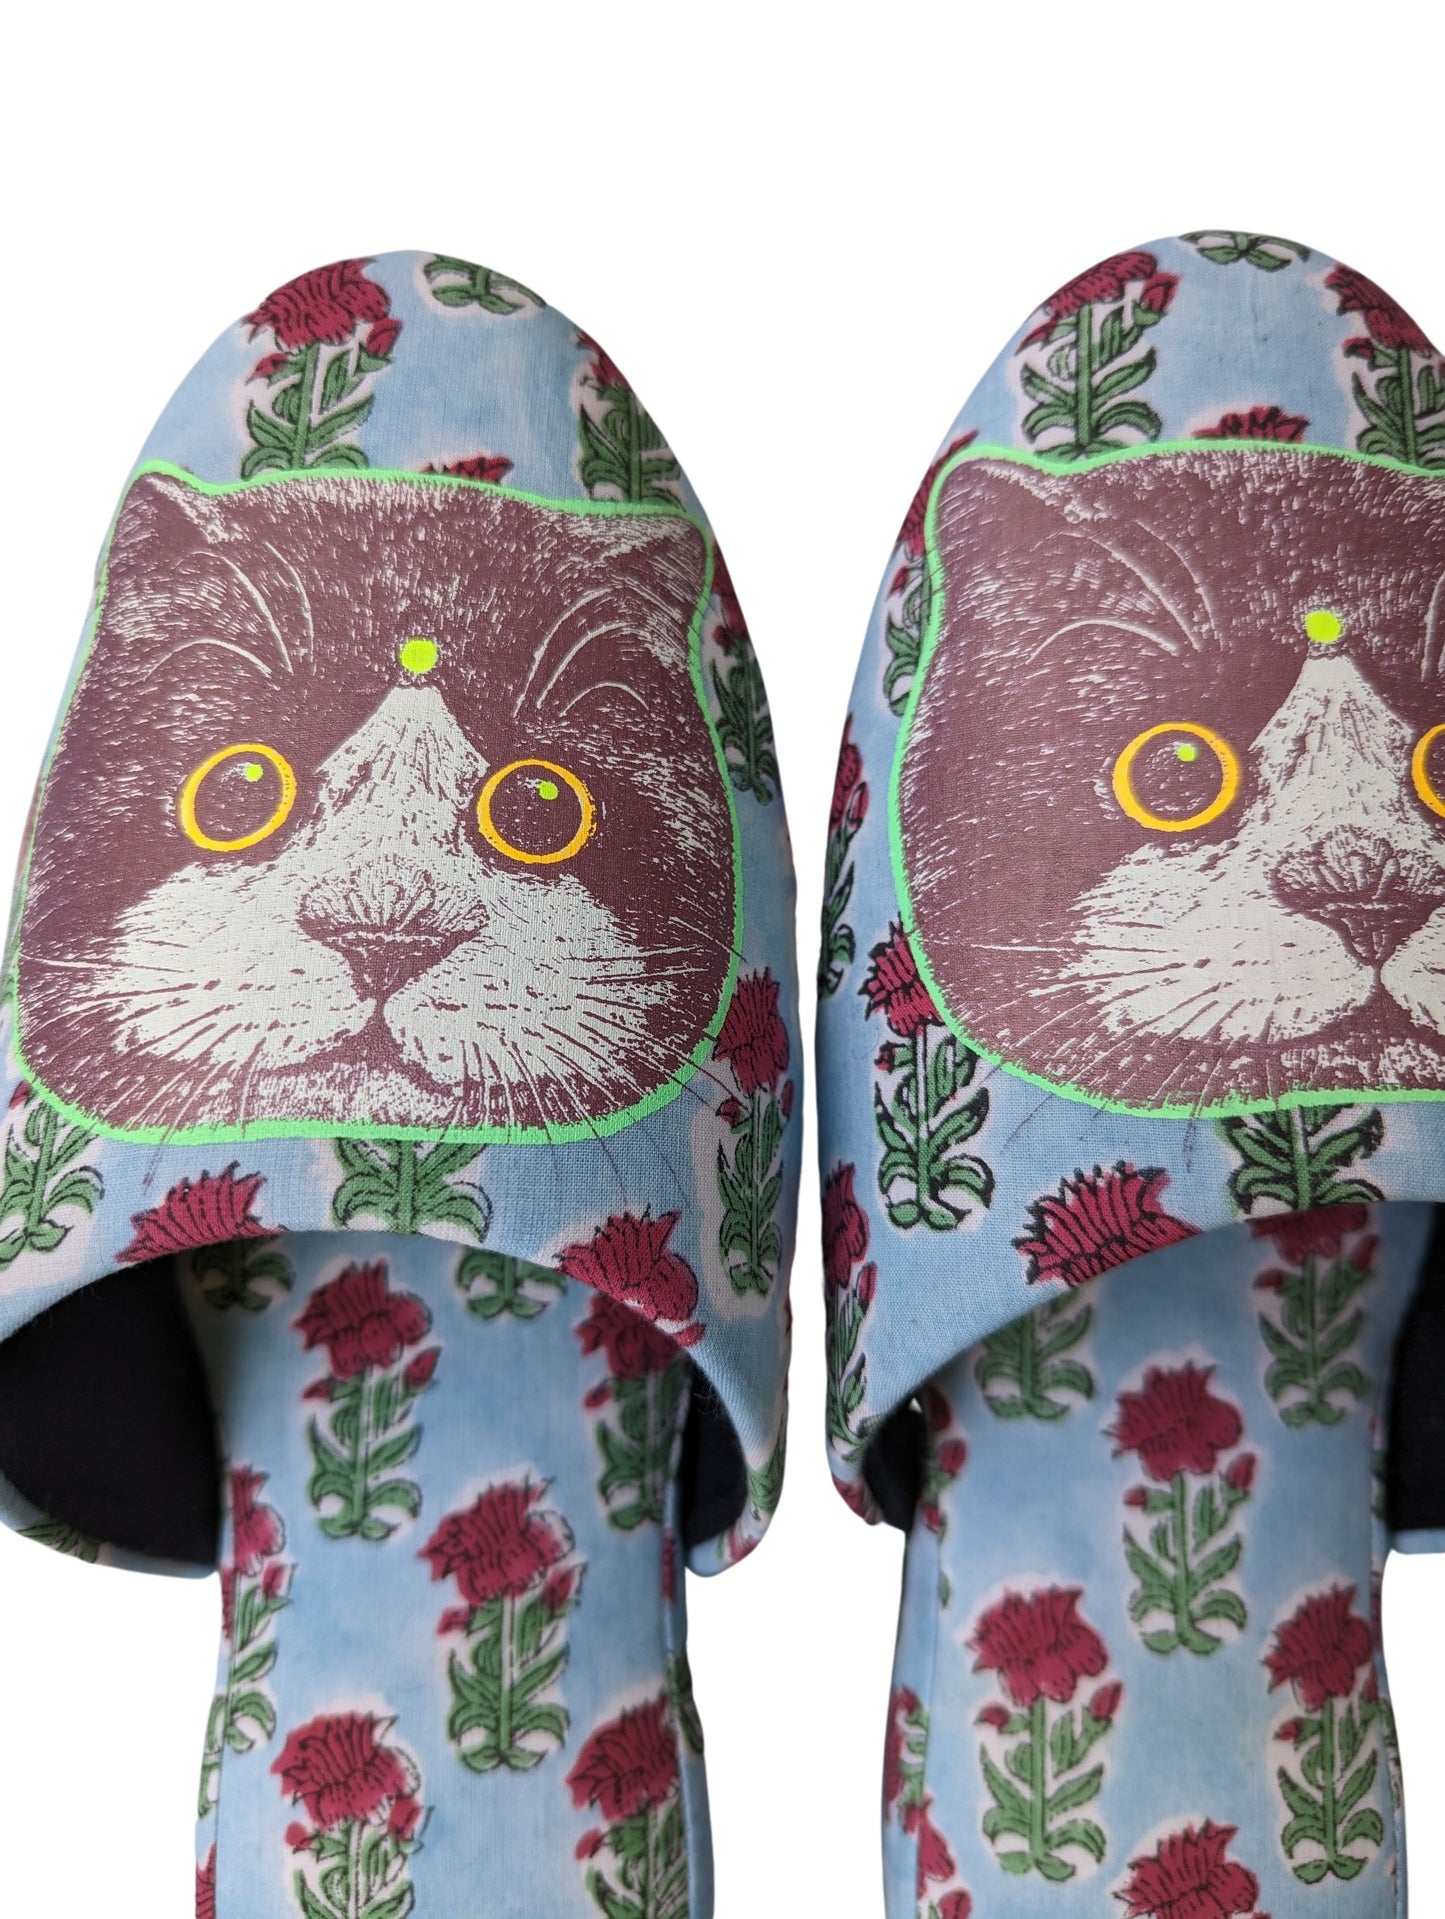 Large Satoshi Onodera / FujiTama-Chang Cat mix slippers  #20S-07 / Silkscreen Printed Mix Slippers [Black wool felt sole] Large